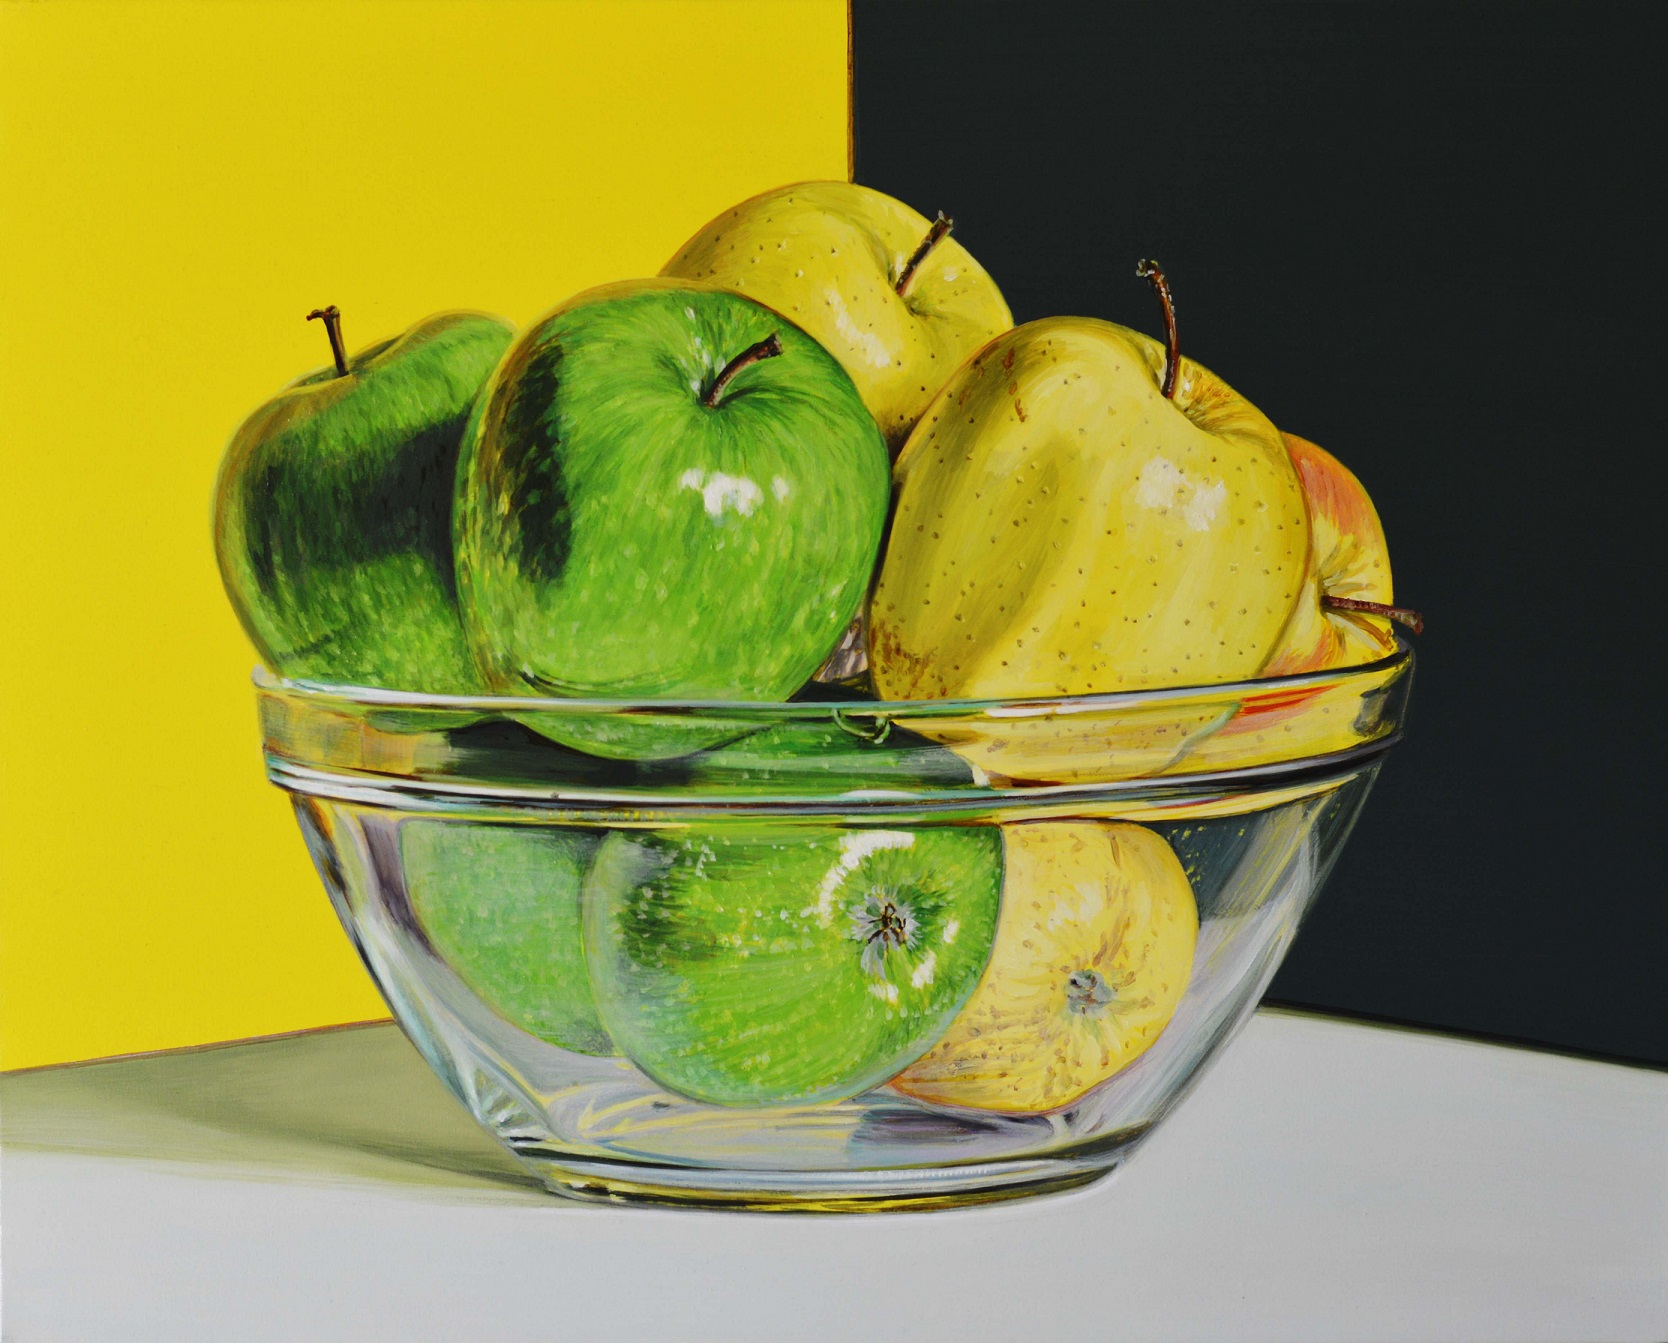 Pietro Alessandro Trovato, Mele verdi e gialle sopra vetro, olio su tela, cm 50x40, 2018